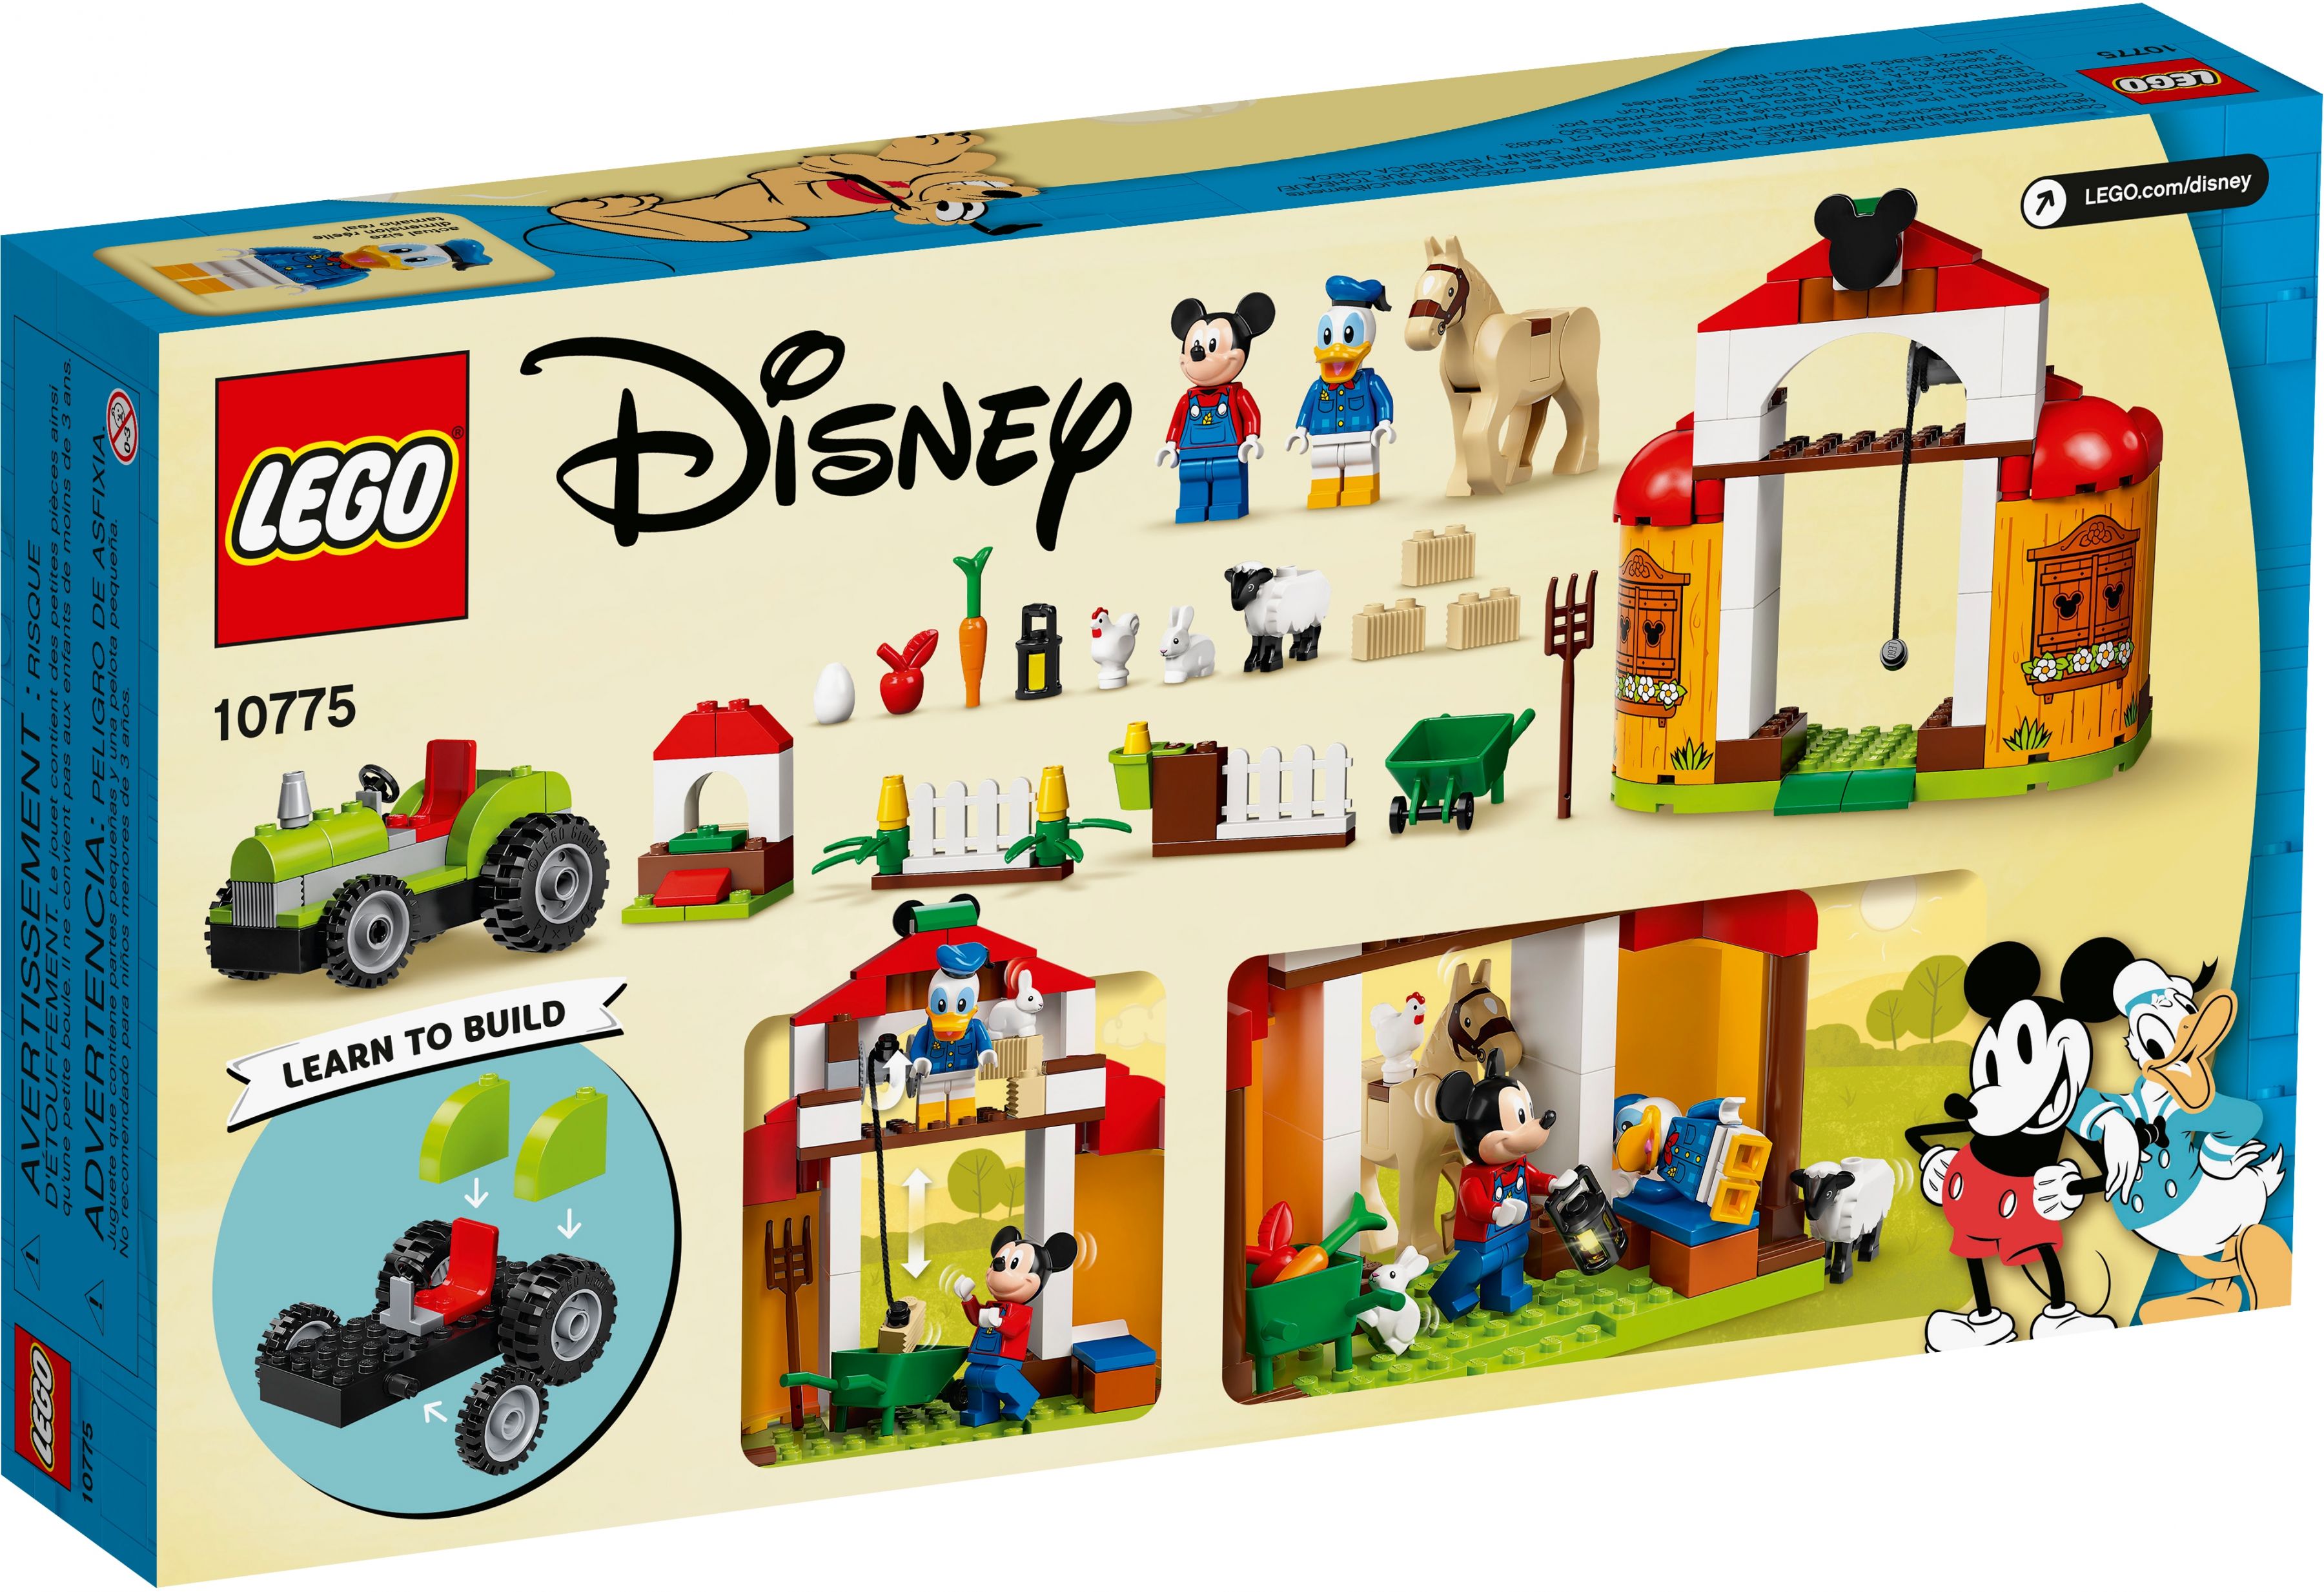 LEGO Disney 10775 Mickys und Donald Duck's Farm LEGO_10775_alt7.jpg